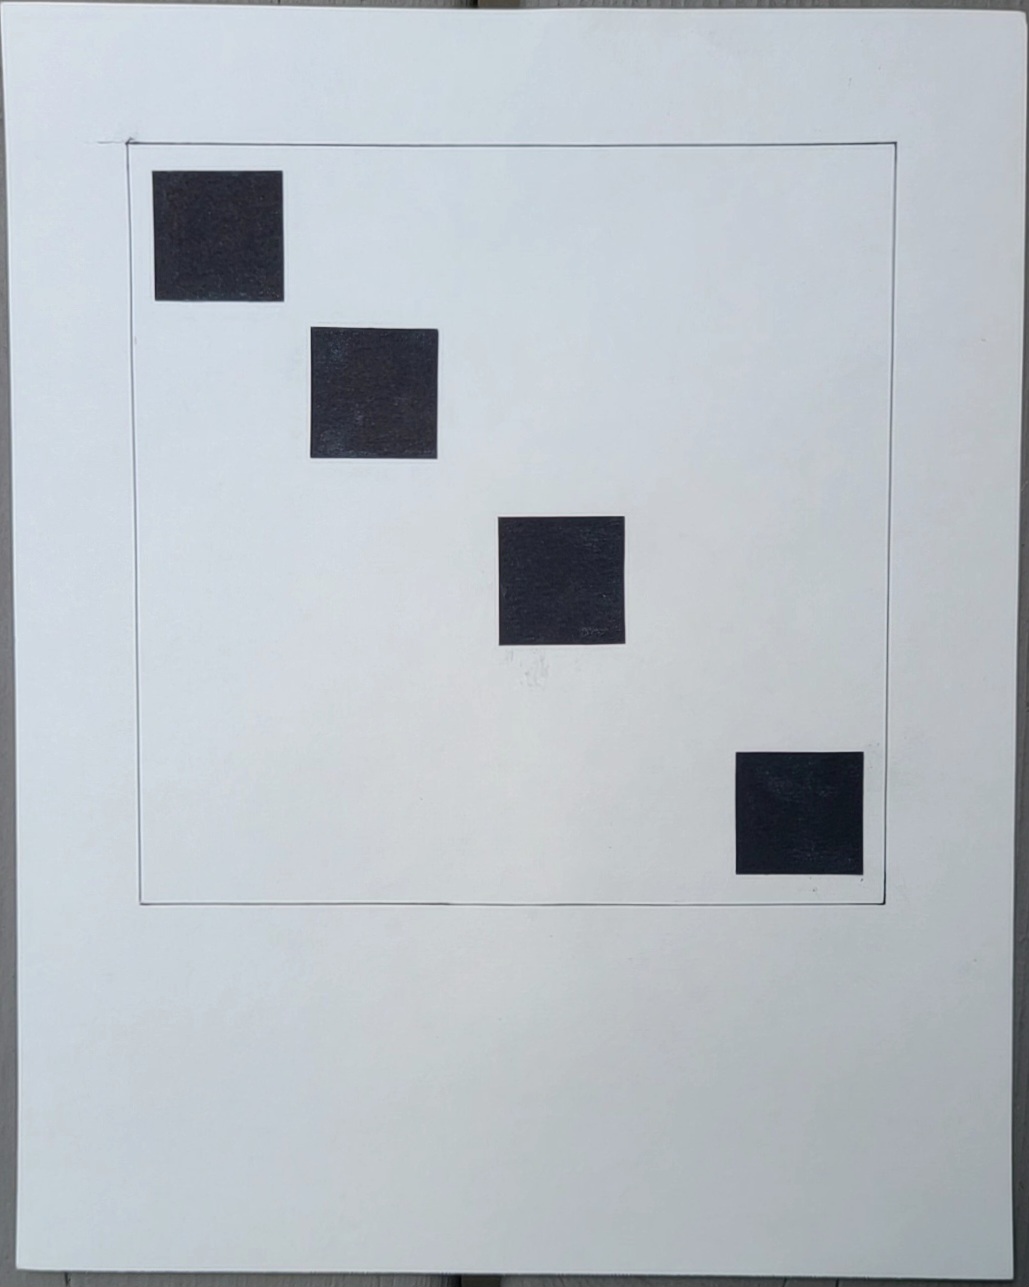 Diagonal line of squares with increasing spacing